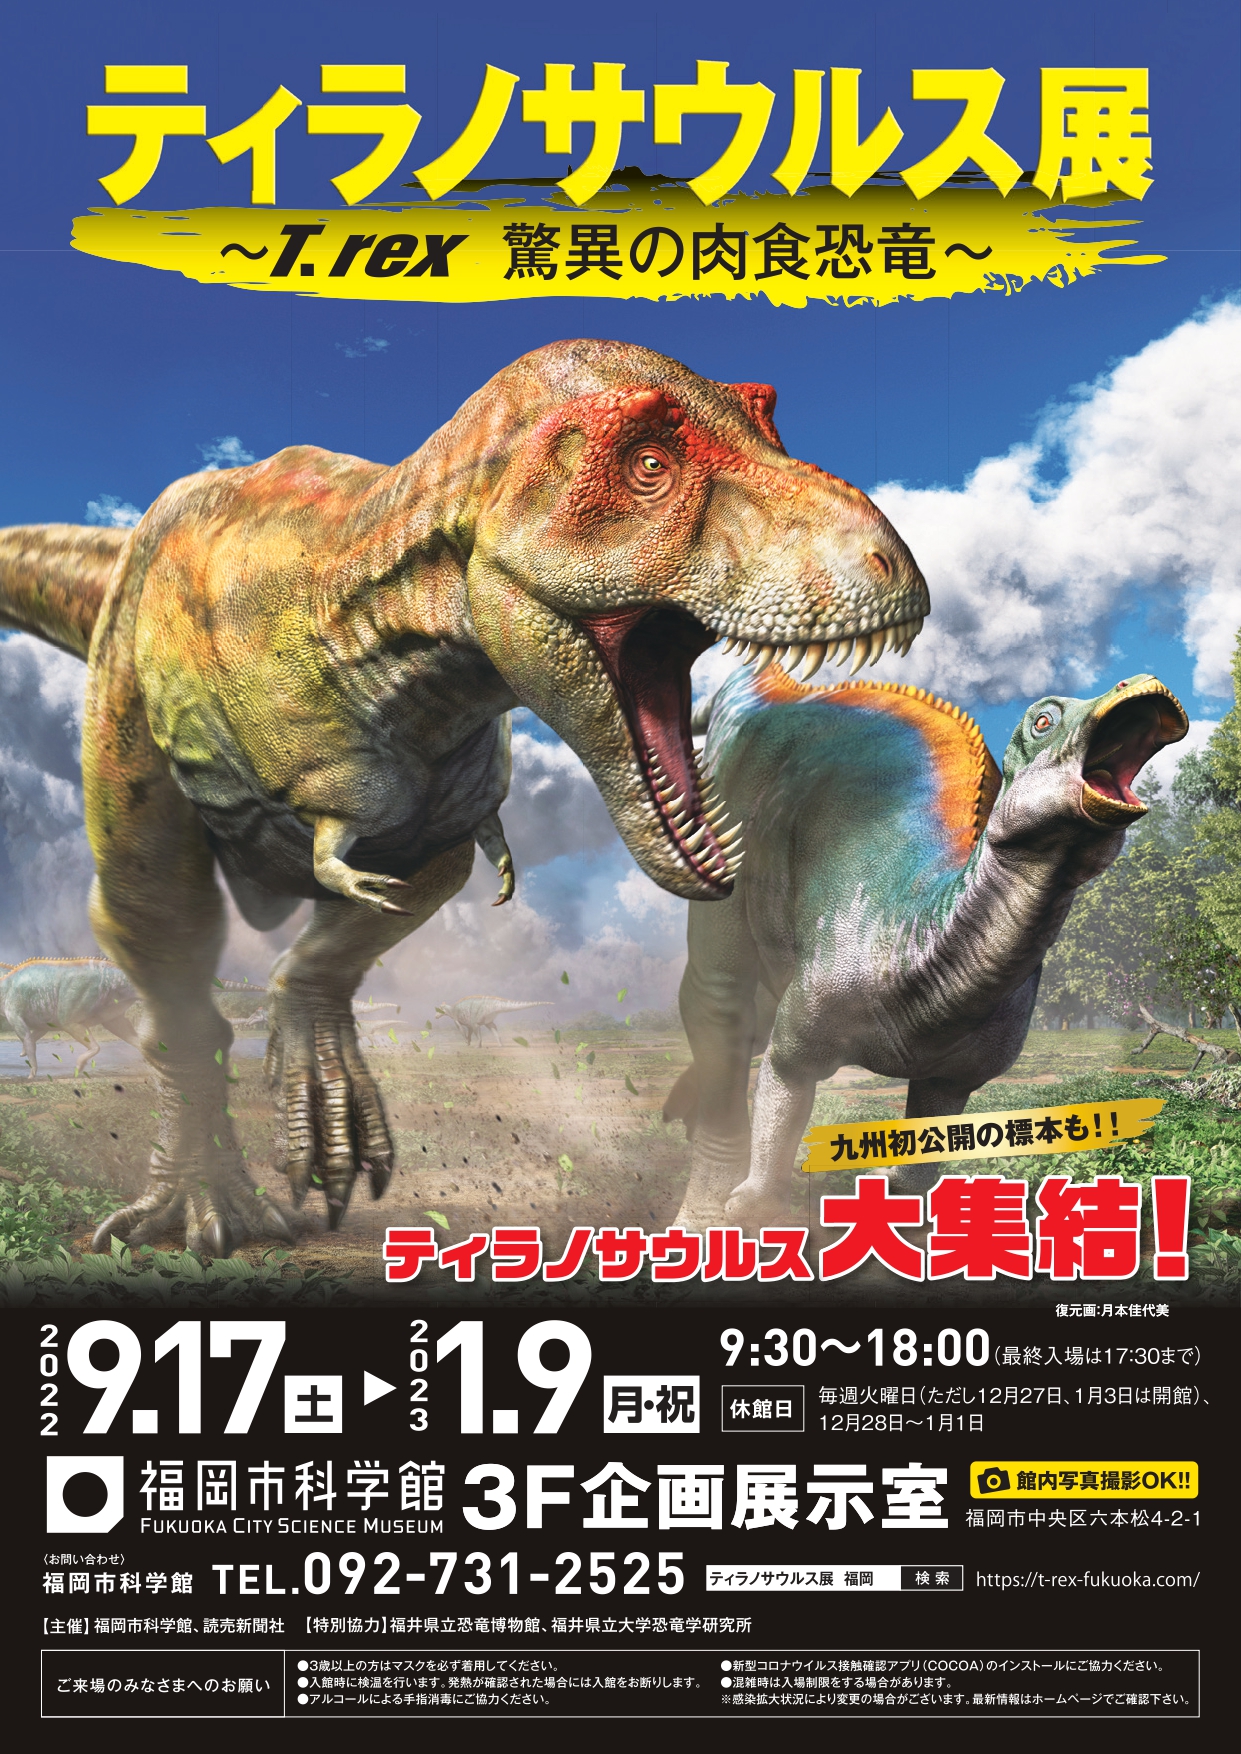 Mutual discount plan with Fukuoka City Science Museum 5th Anniversary Special Exhibition "Tyrannosaurus Exhibition ~T.rex Amazing Carnivorous Dinosaur~"